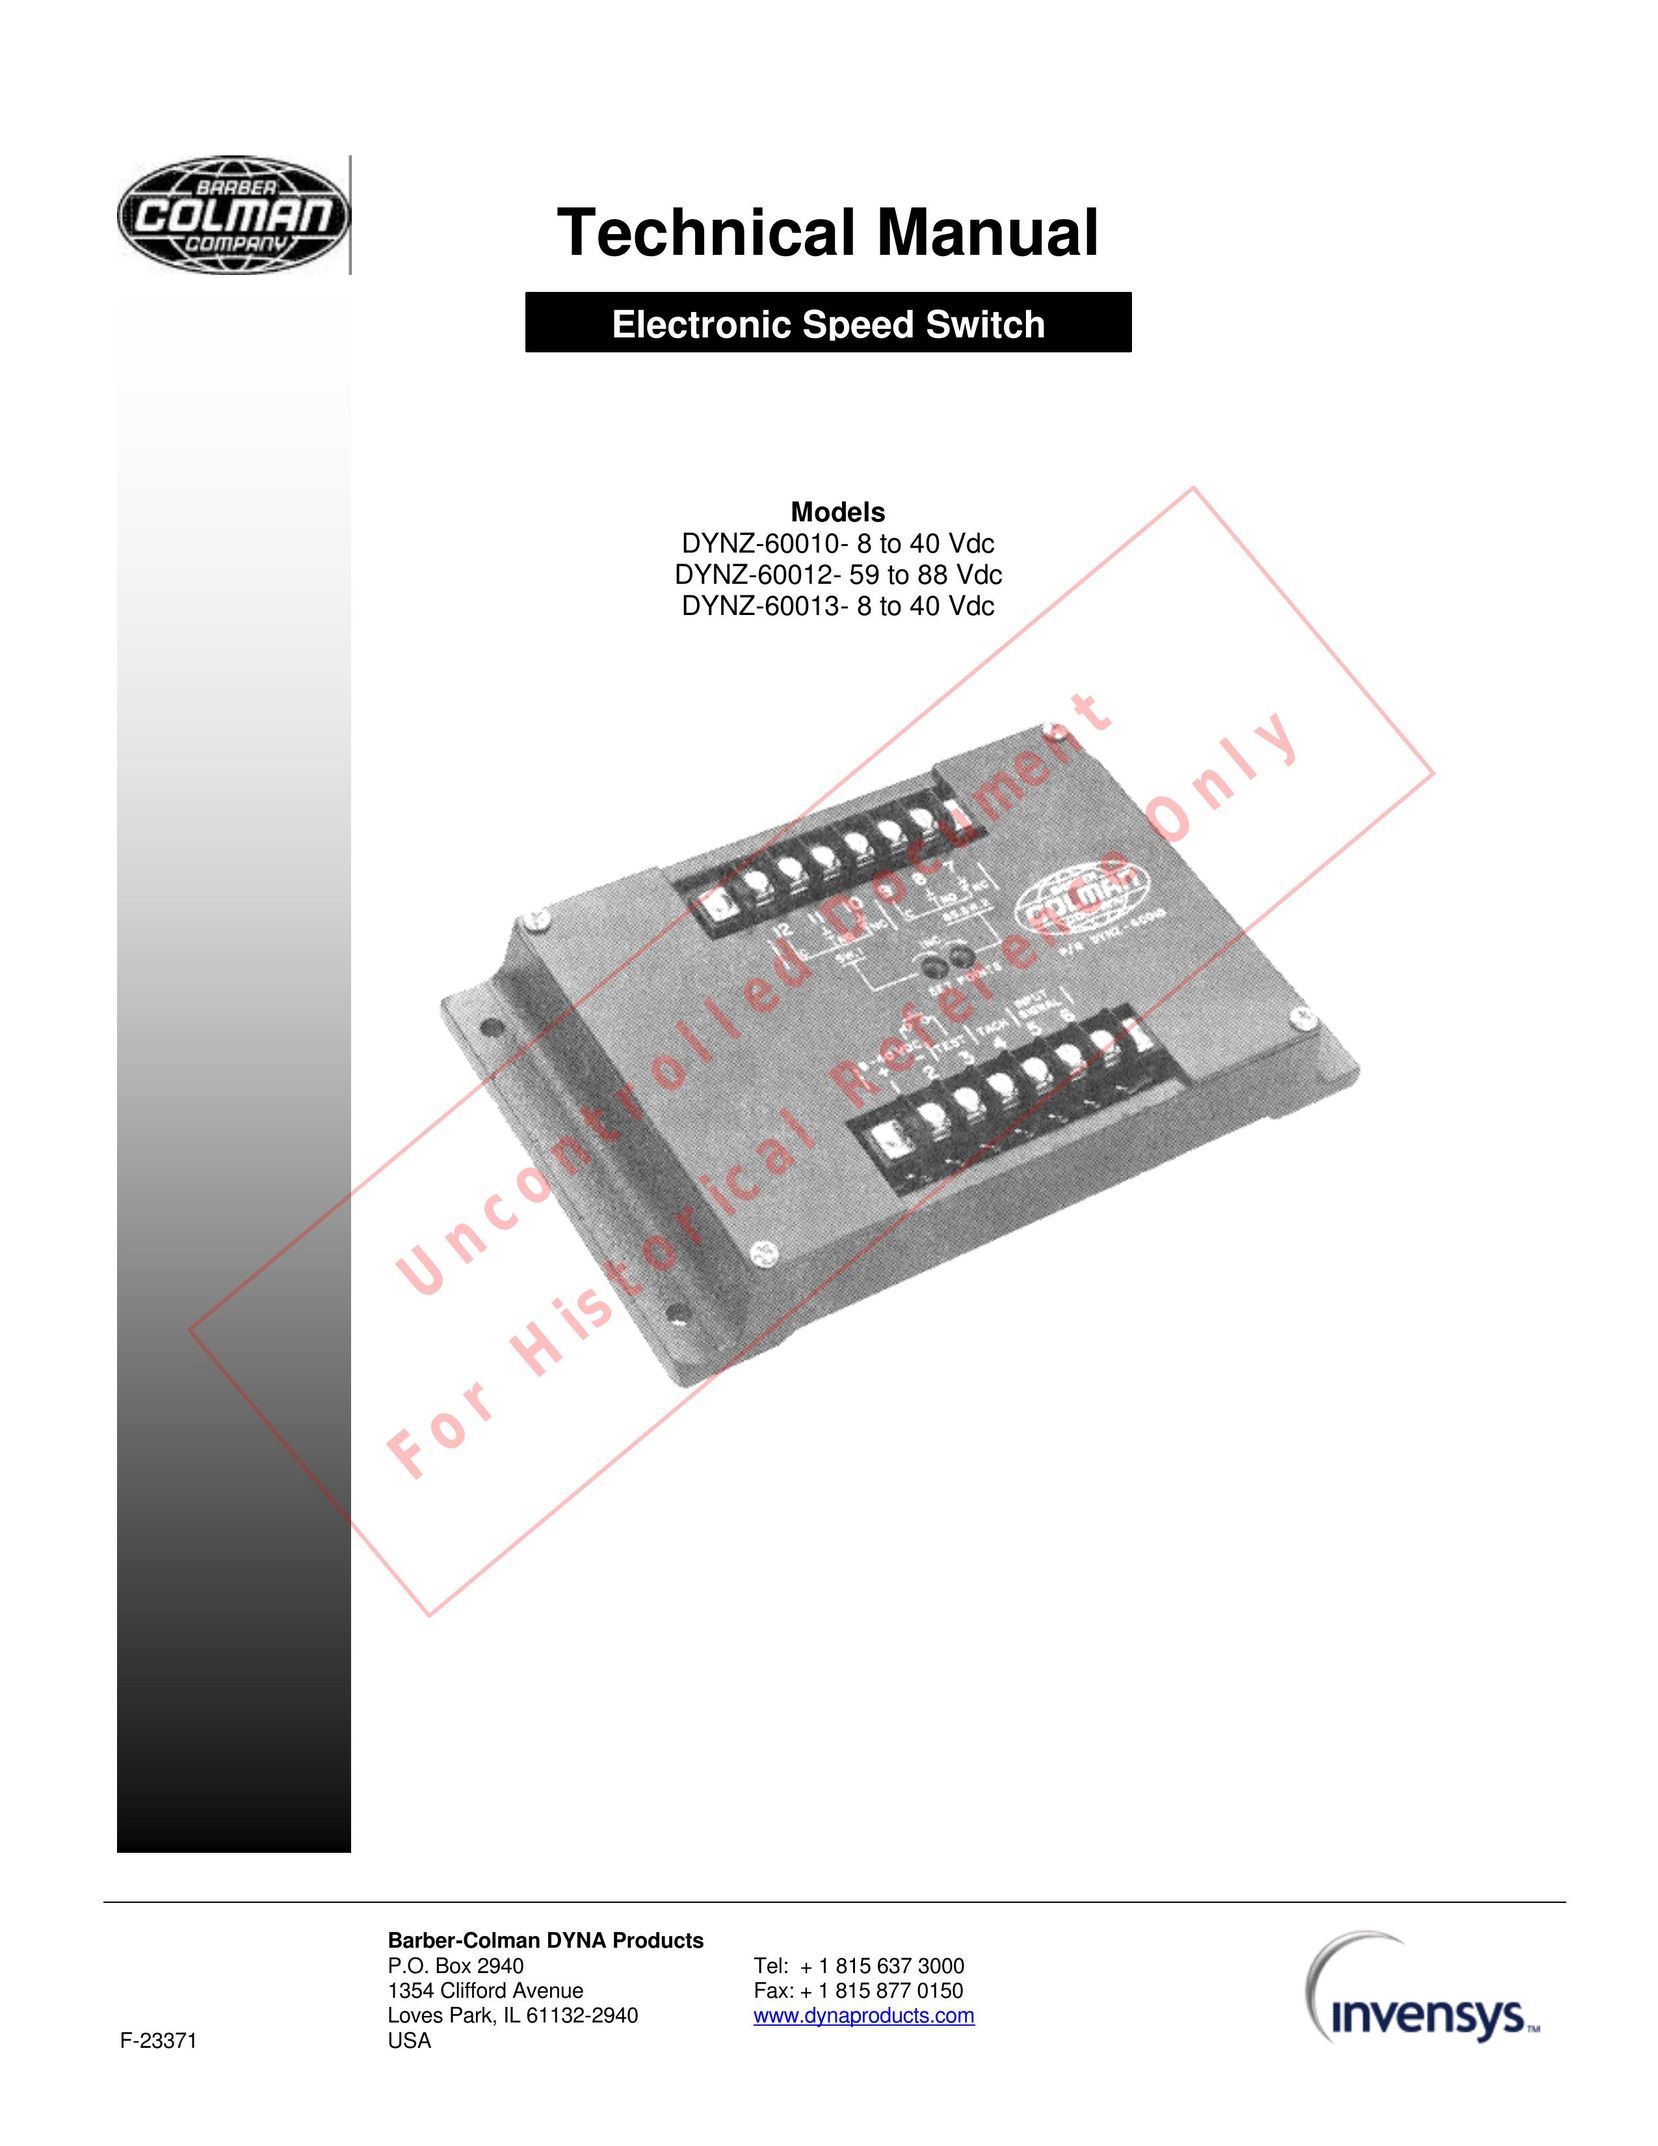 Plantronics DYNZ-600 Series Switch User Manual